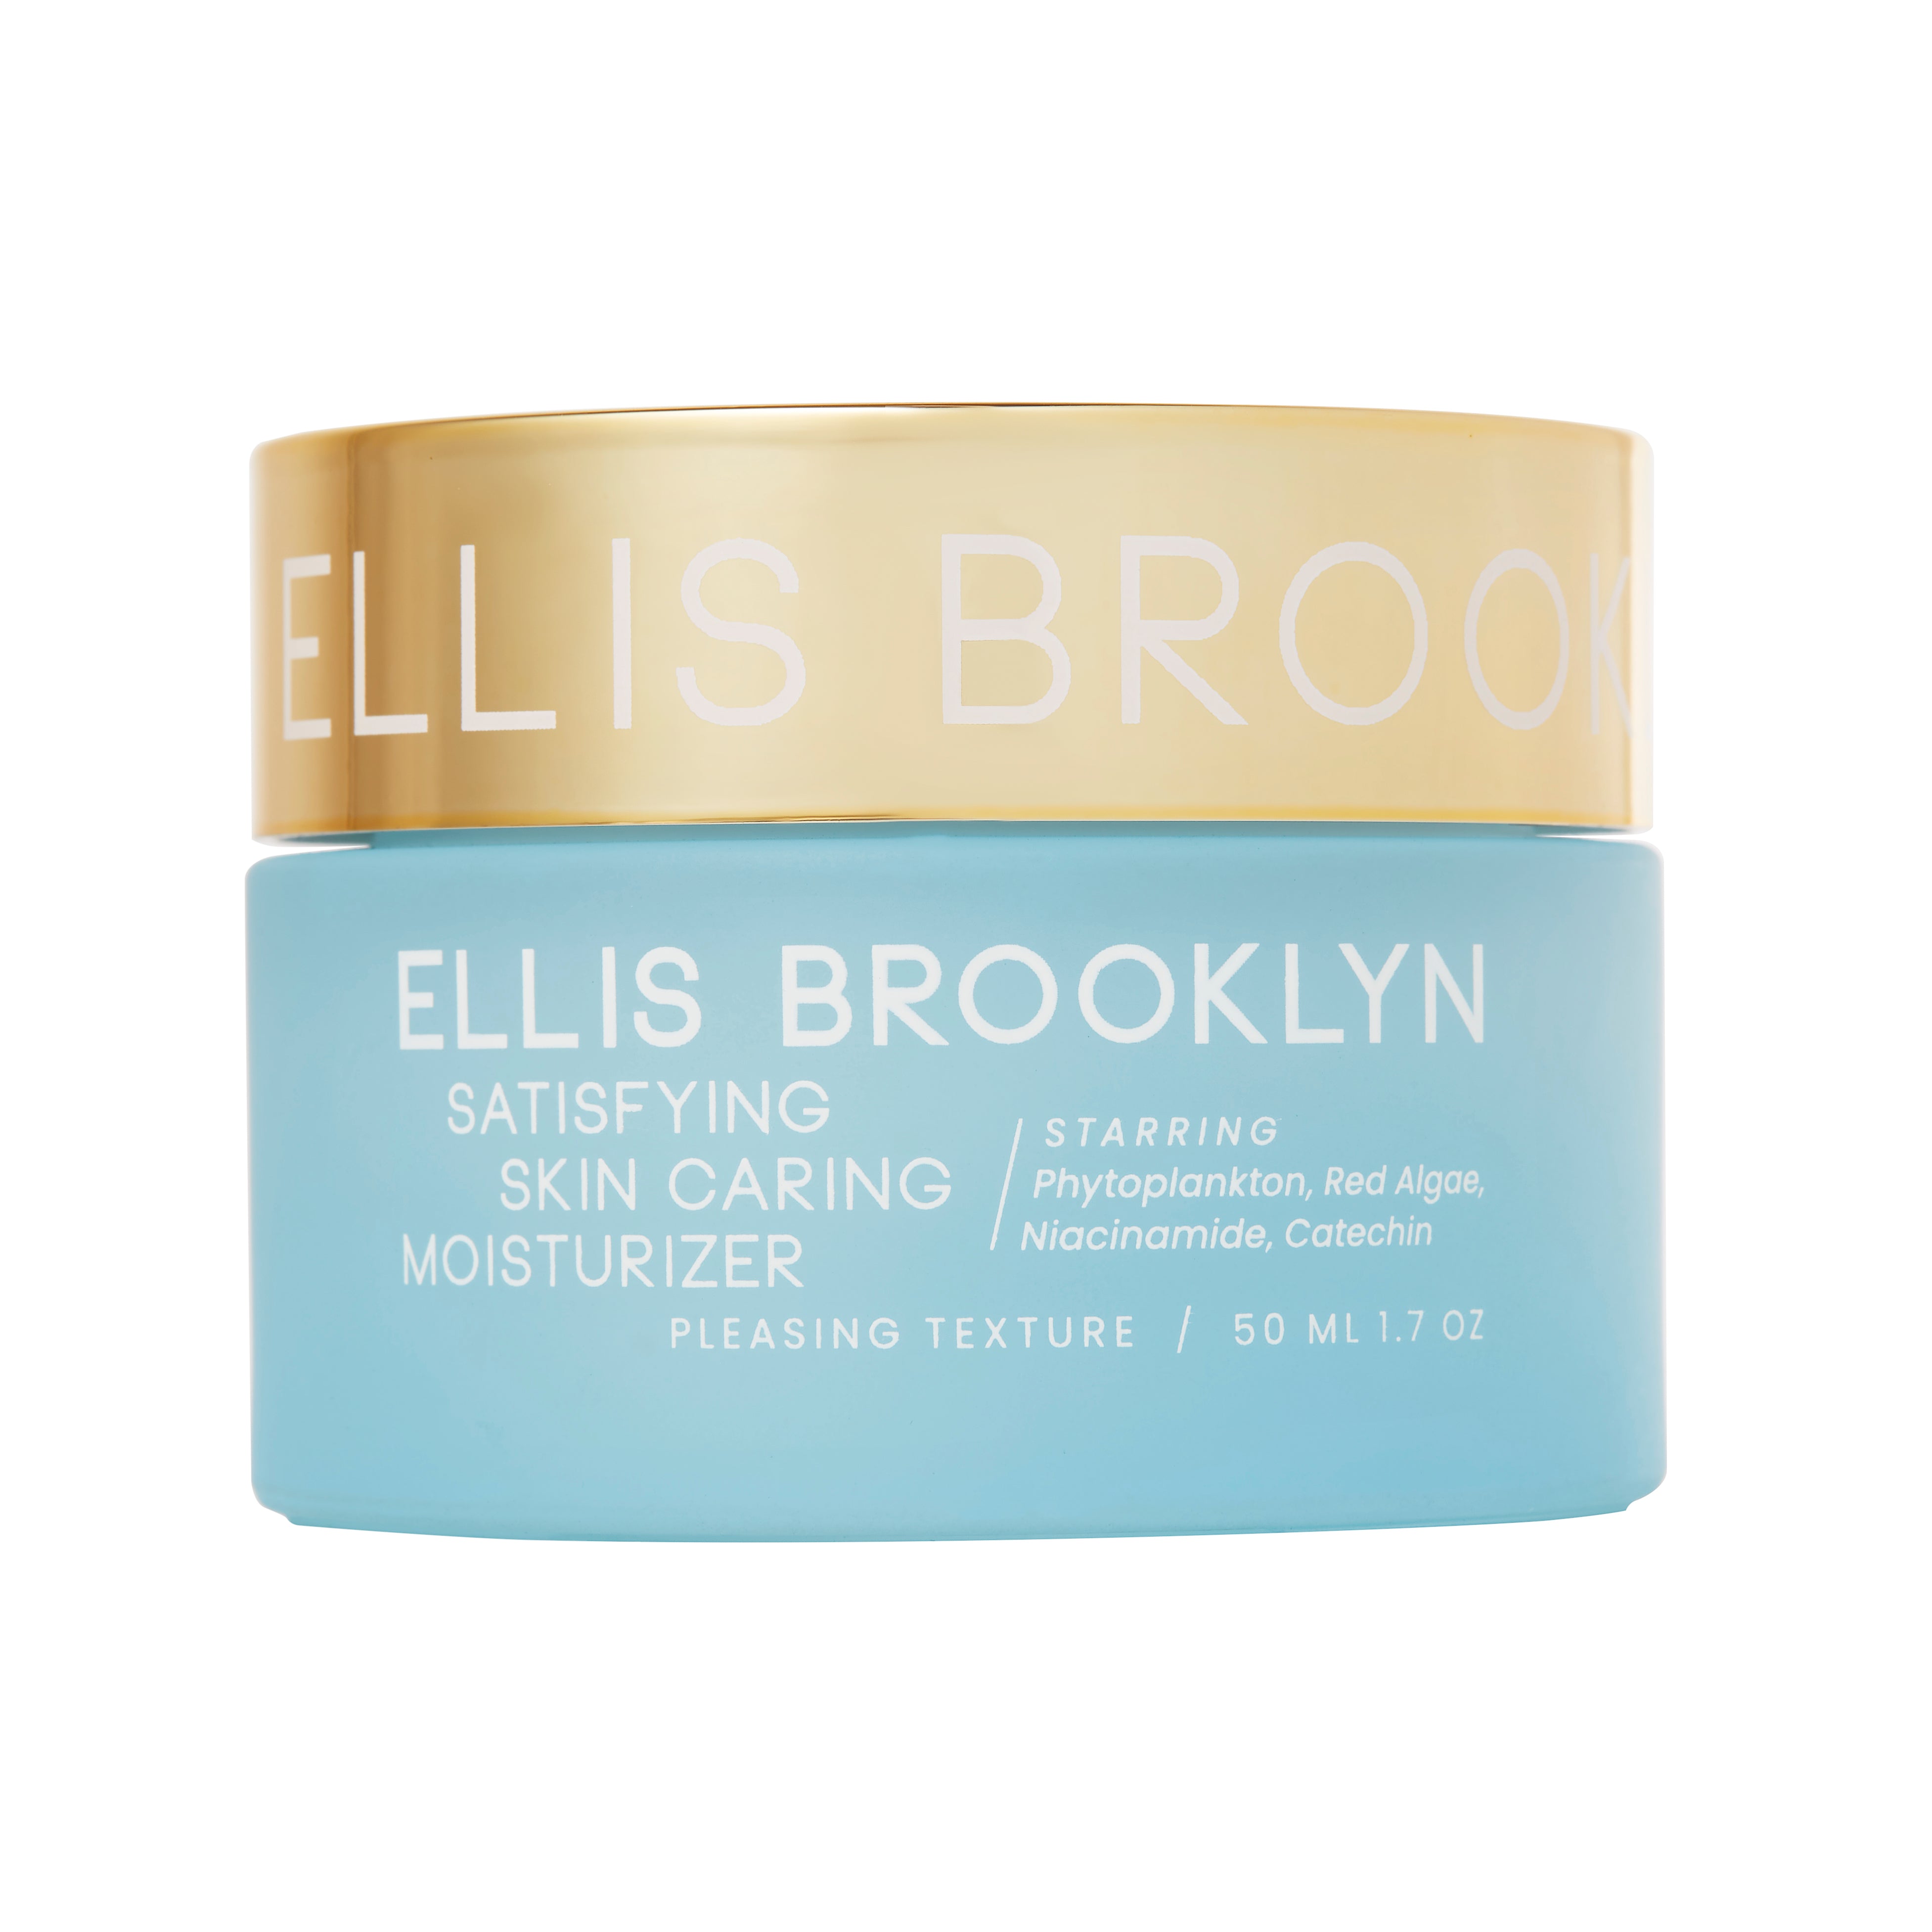 Ellis Brooklyn Satisfying Skin Caring Moisturizer